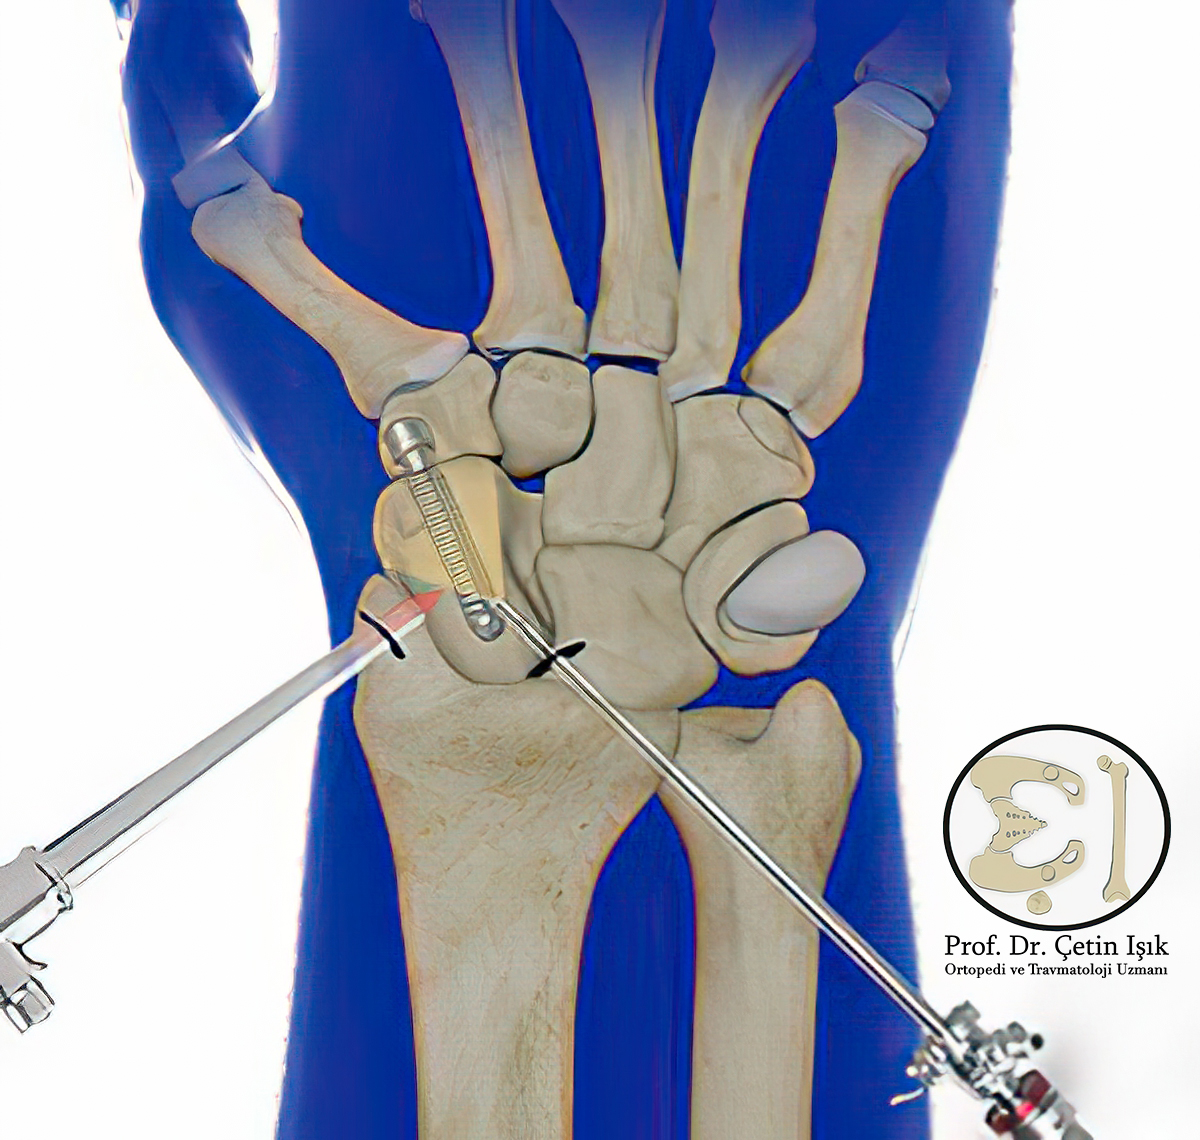 Image showing arthroscopic fixation of dislocated wrist bones